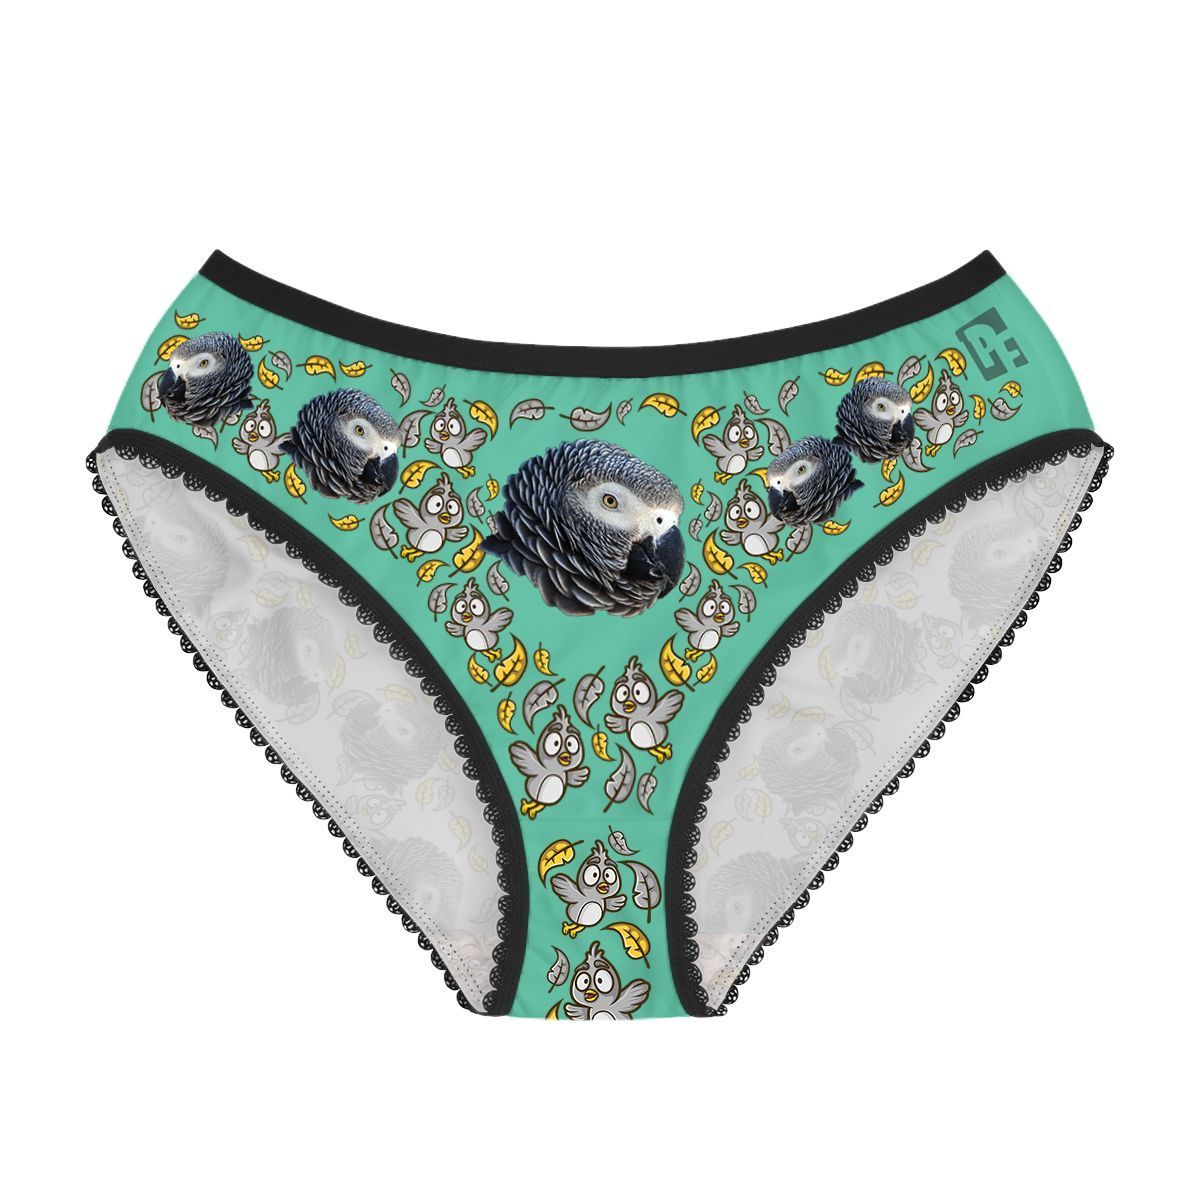 Mint Bird women's underwear briefs personalized with photo printed on them